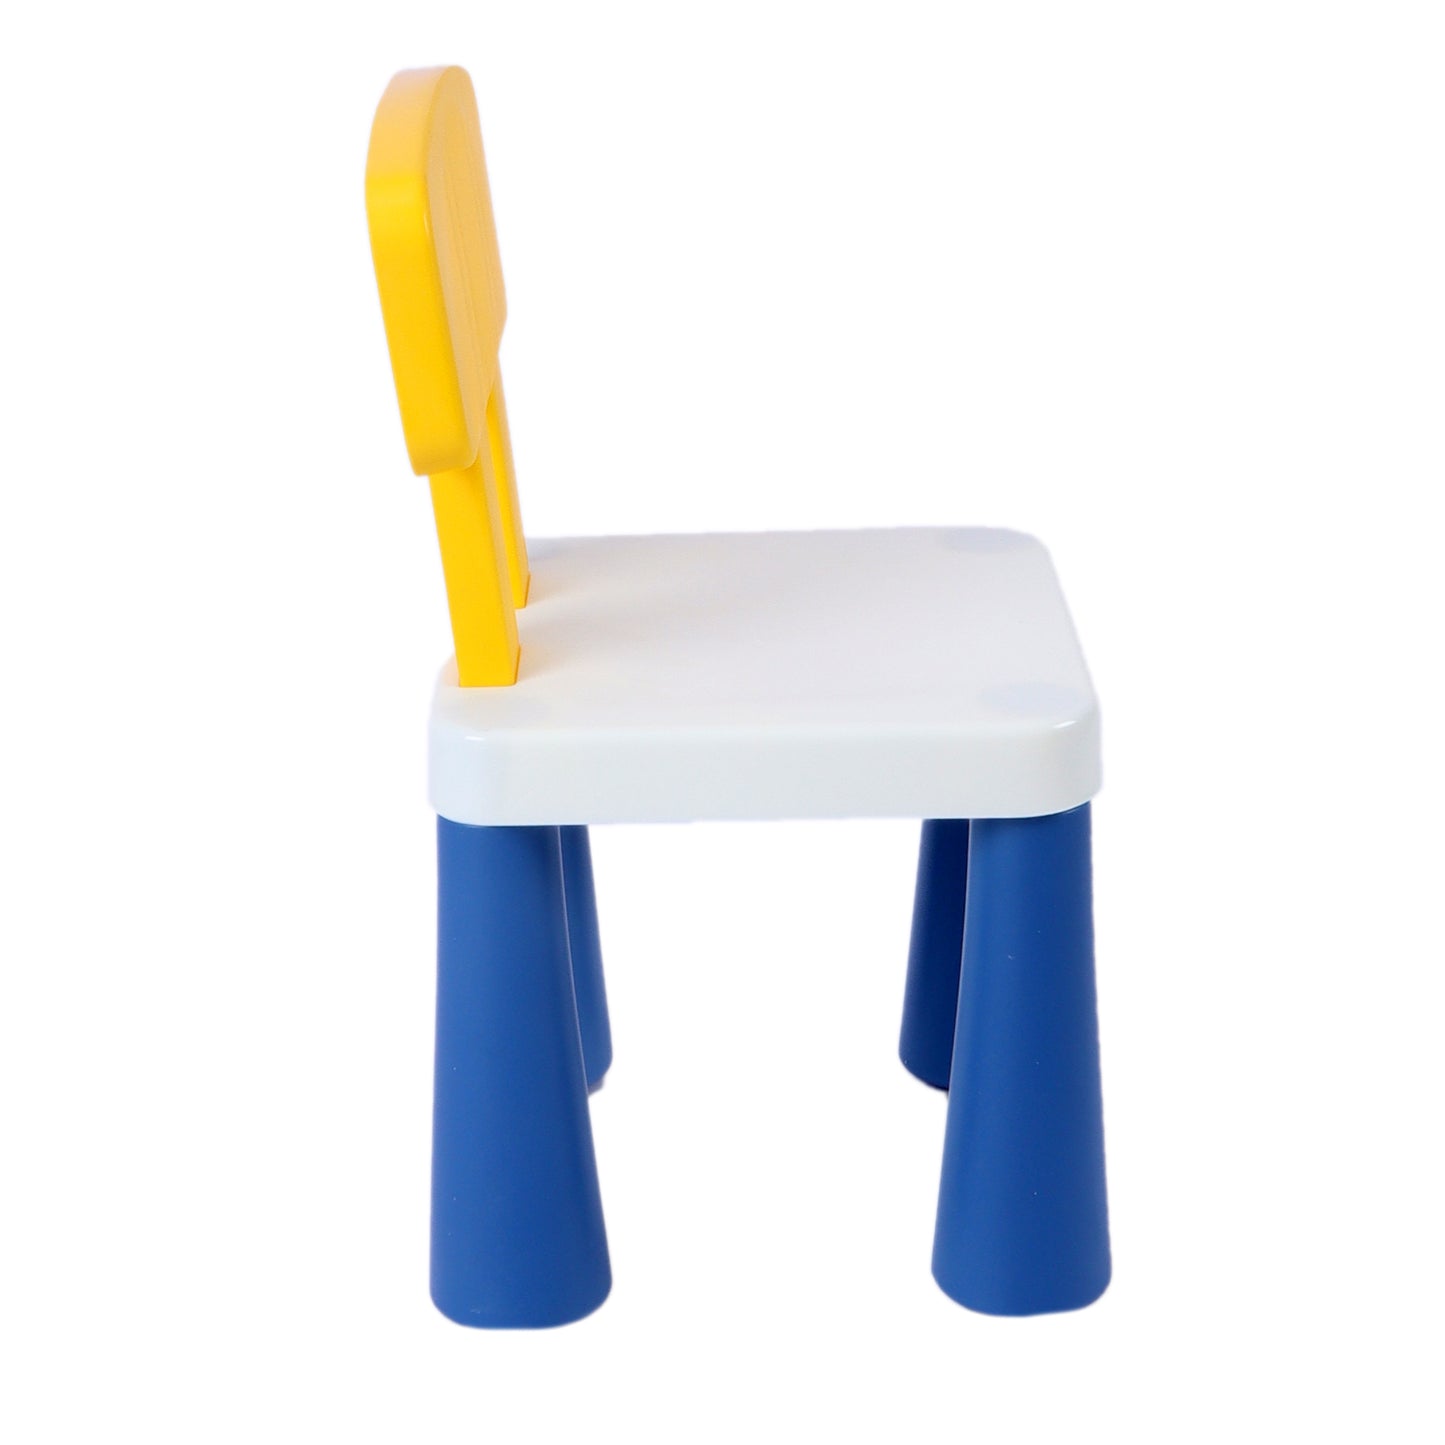 Study Table & Chair Set Blue (3-5yrs)